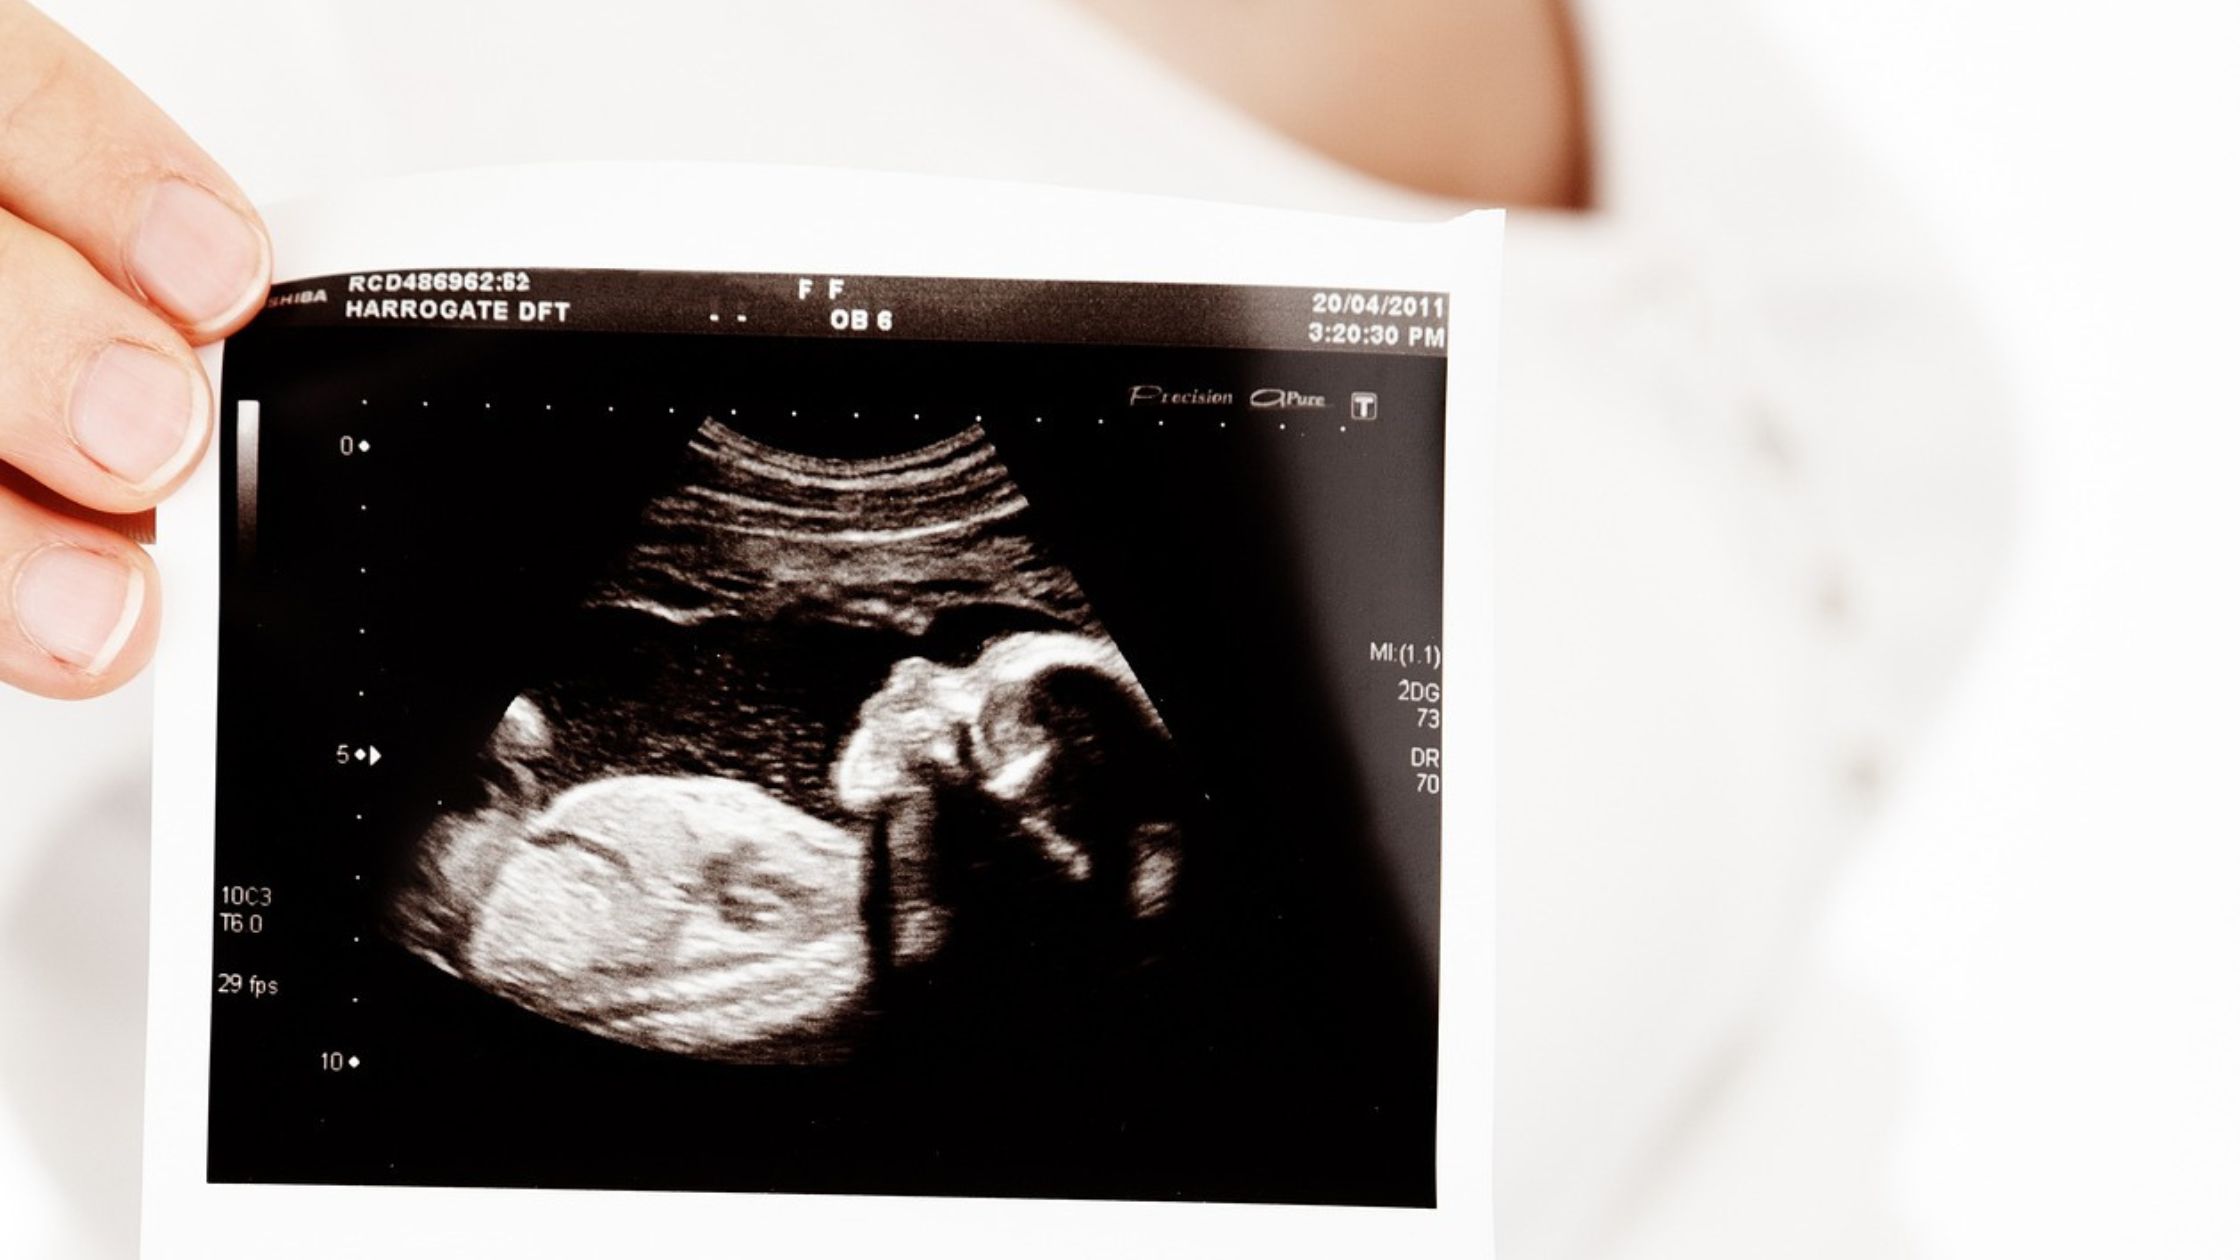 Are ultrasounds safe